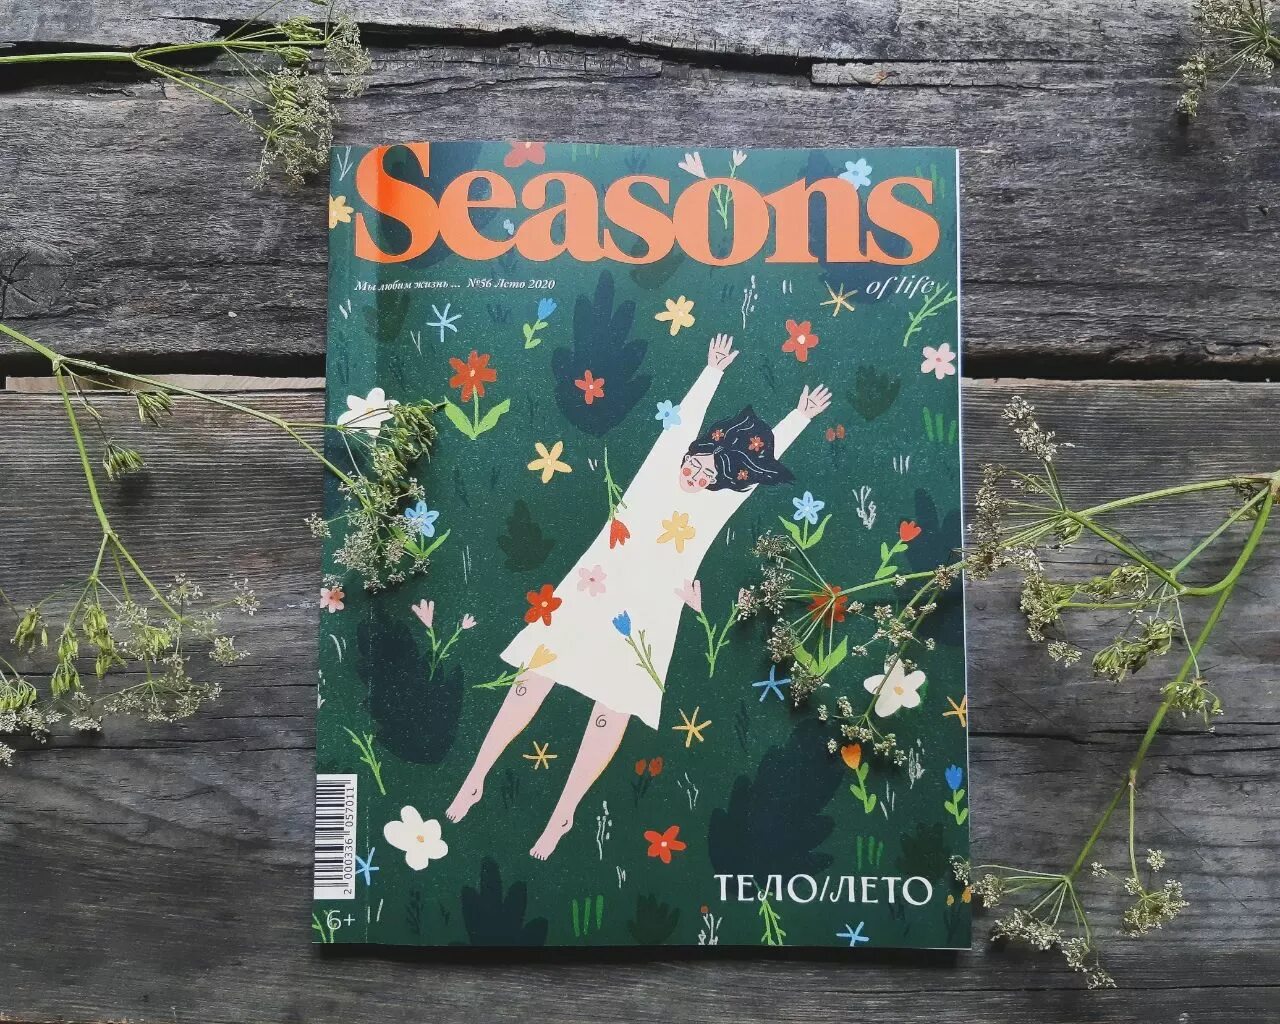 Seasons of Life журнал. Журнал Сизонс обложки. Seasons шурнала. Обложка журнала лето. Seasons are beautiful